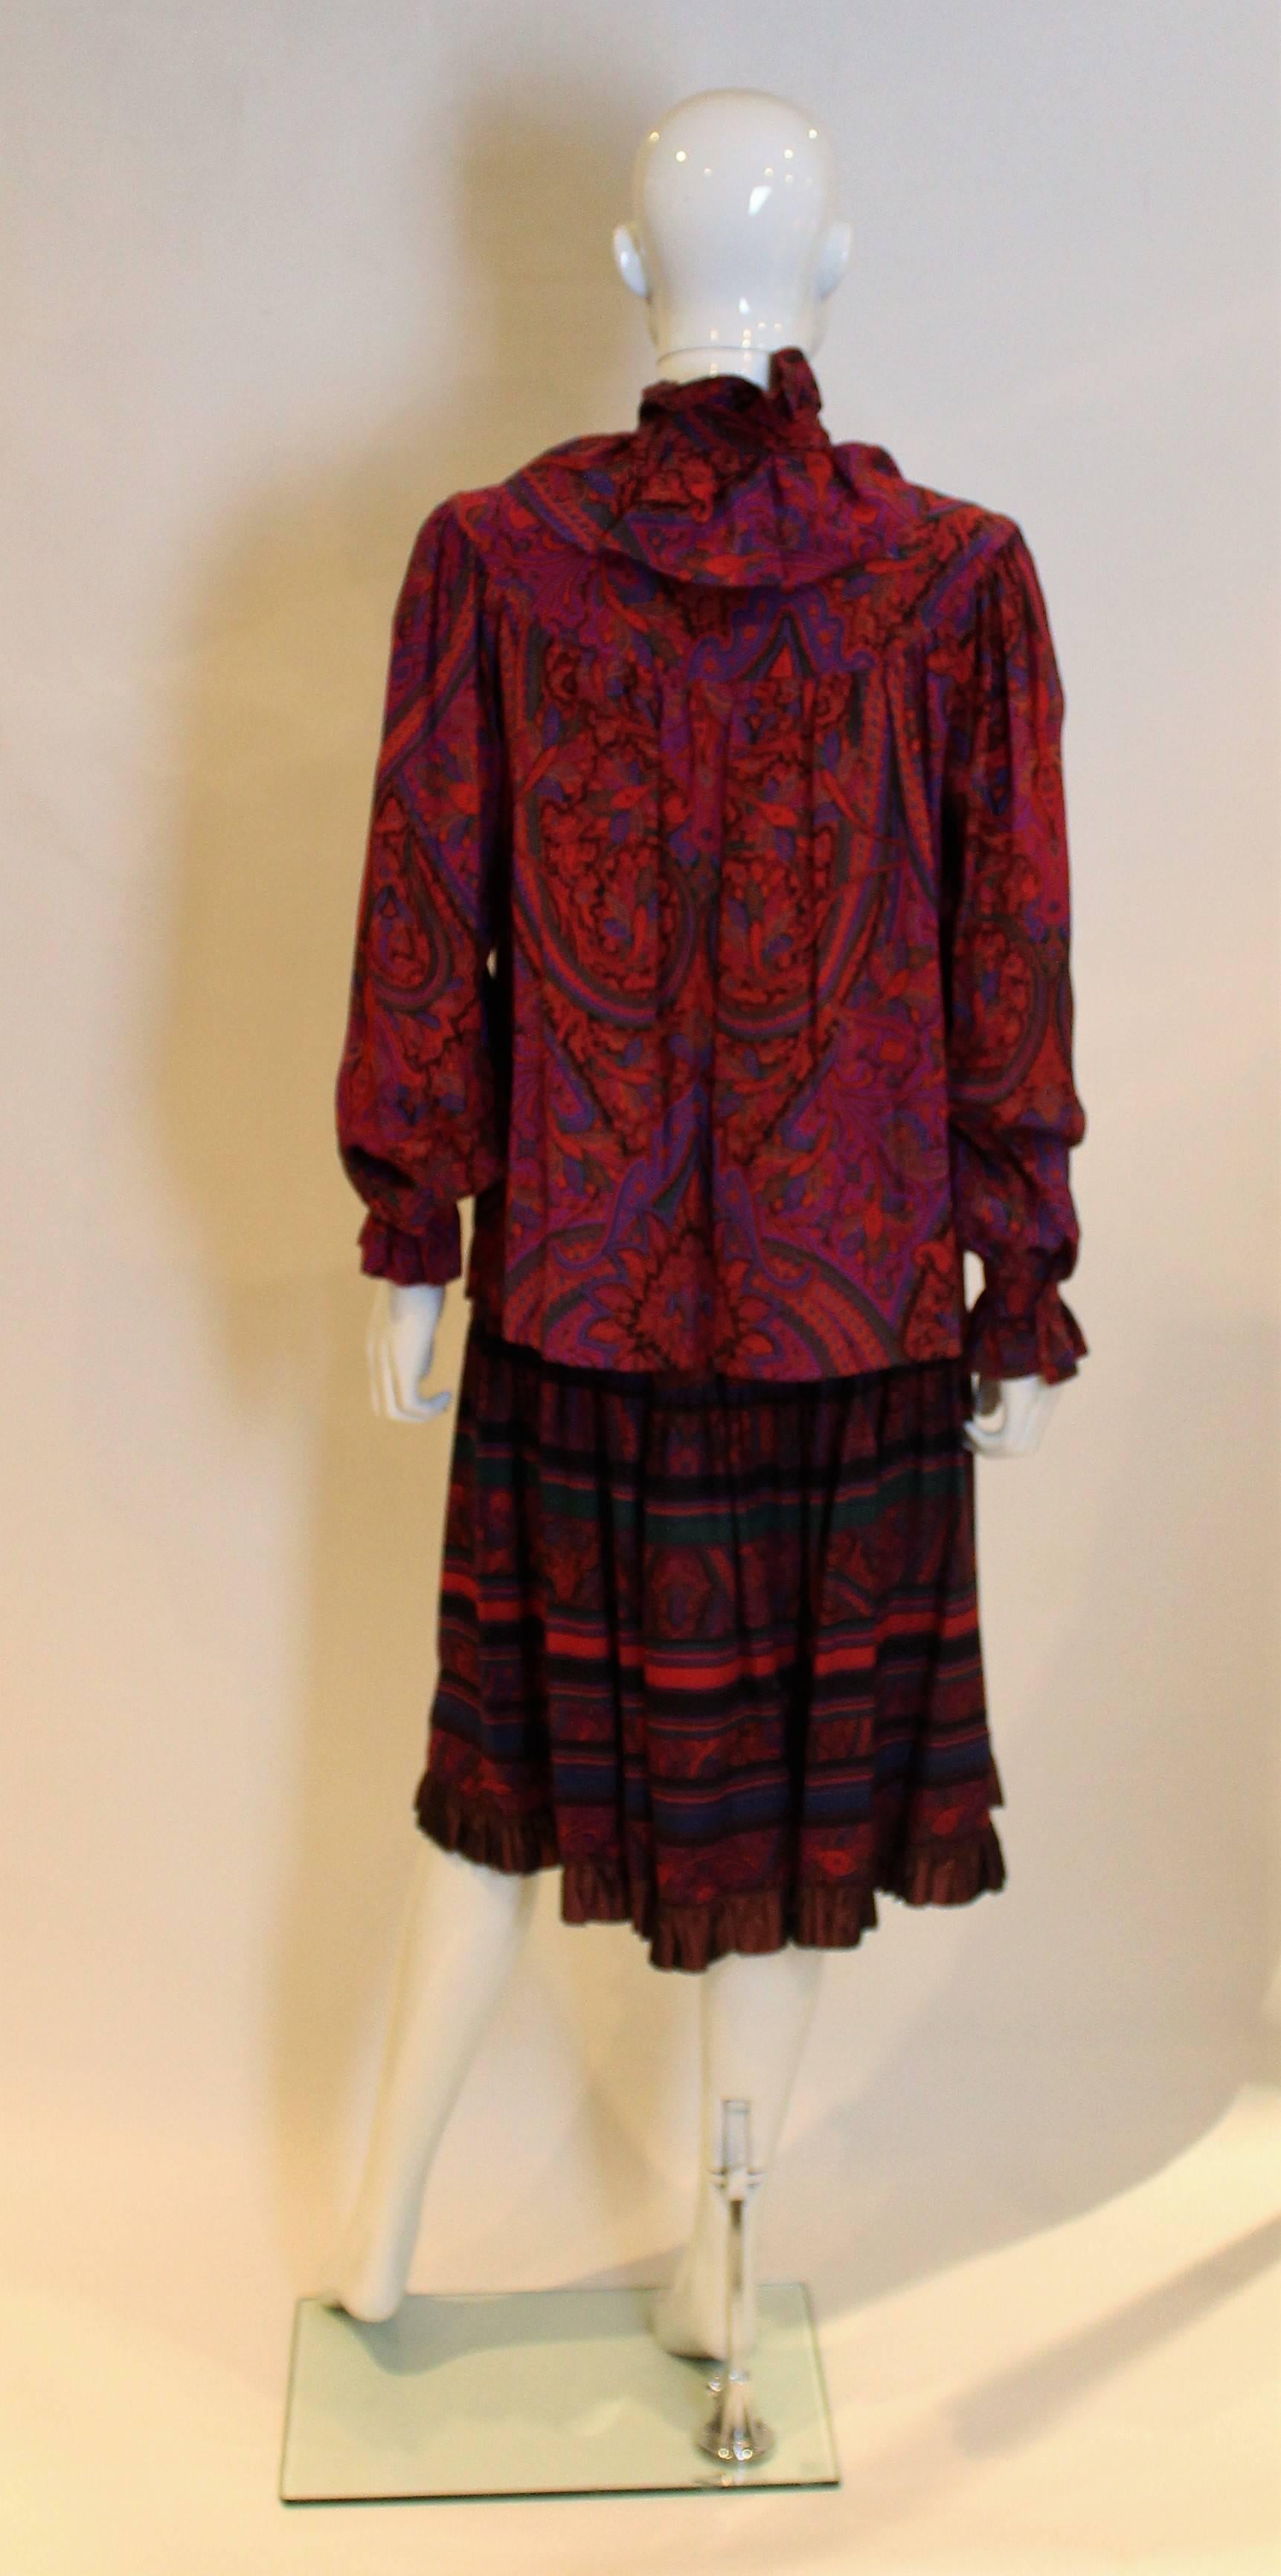 Women's Yves Saint Laurent Silk Blouse and Woo Skirt in Paisley Design